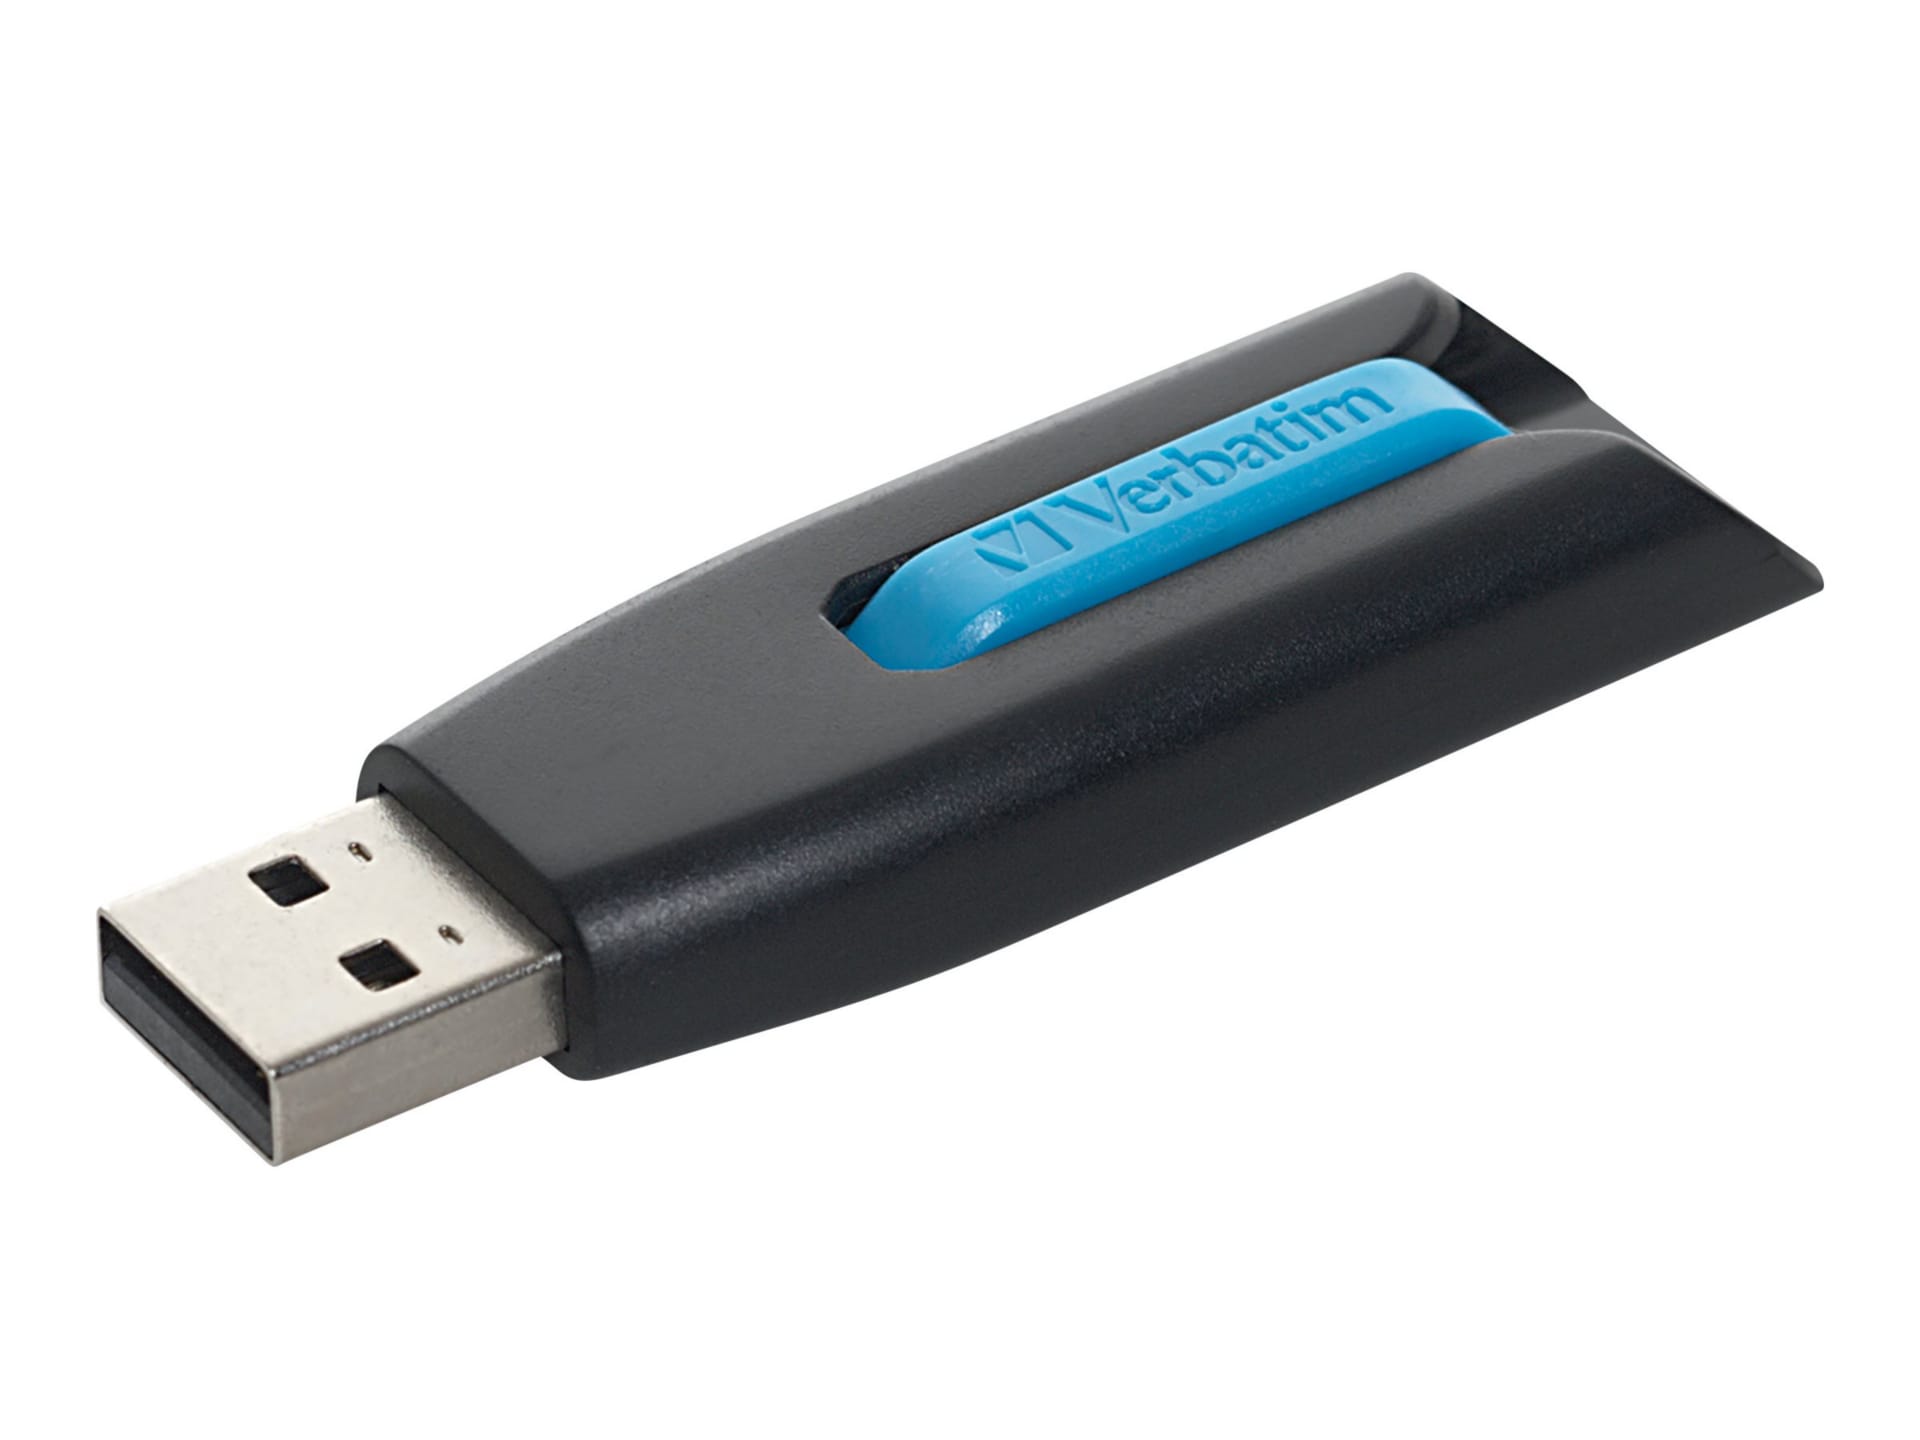 Verbatim Store 'n' Go V3 - USB flash drive - 16 GB